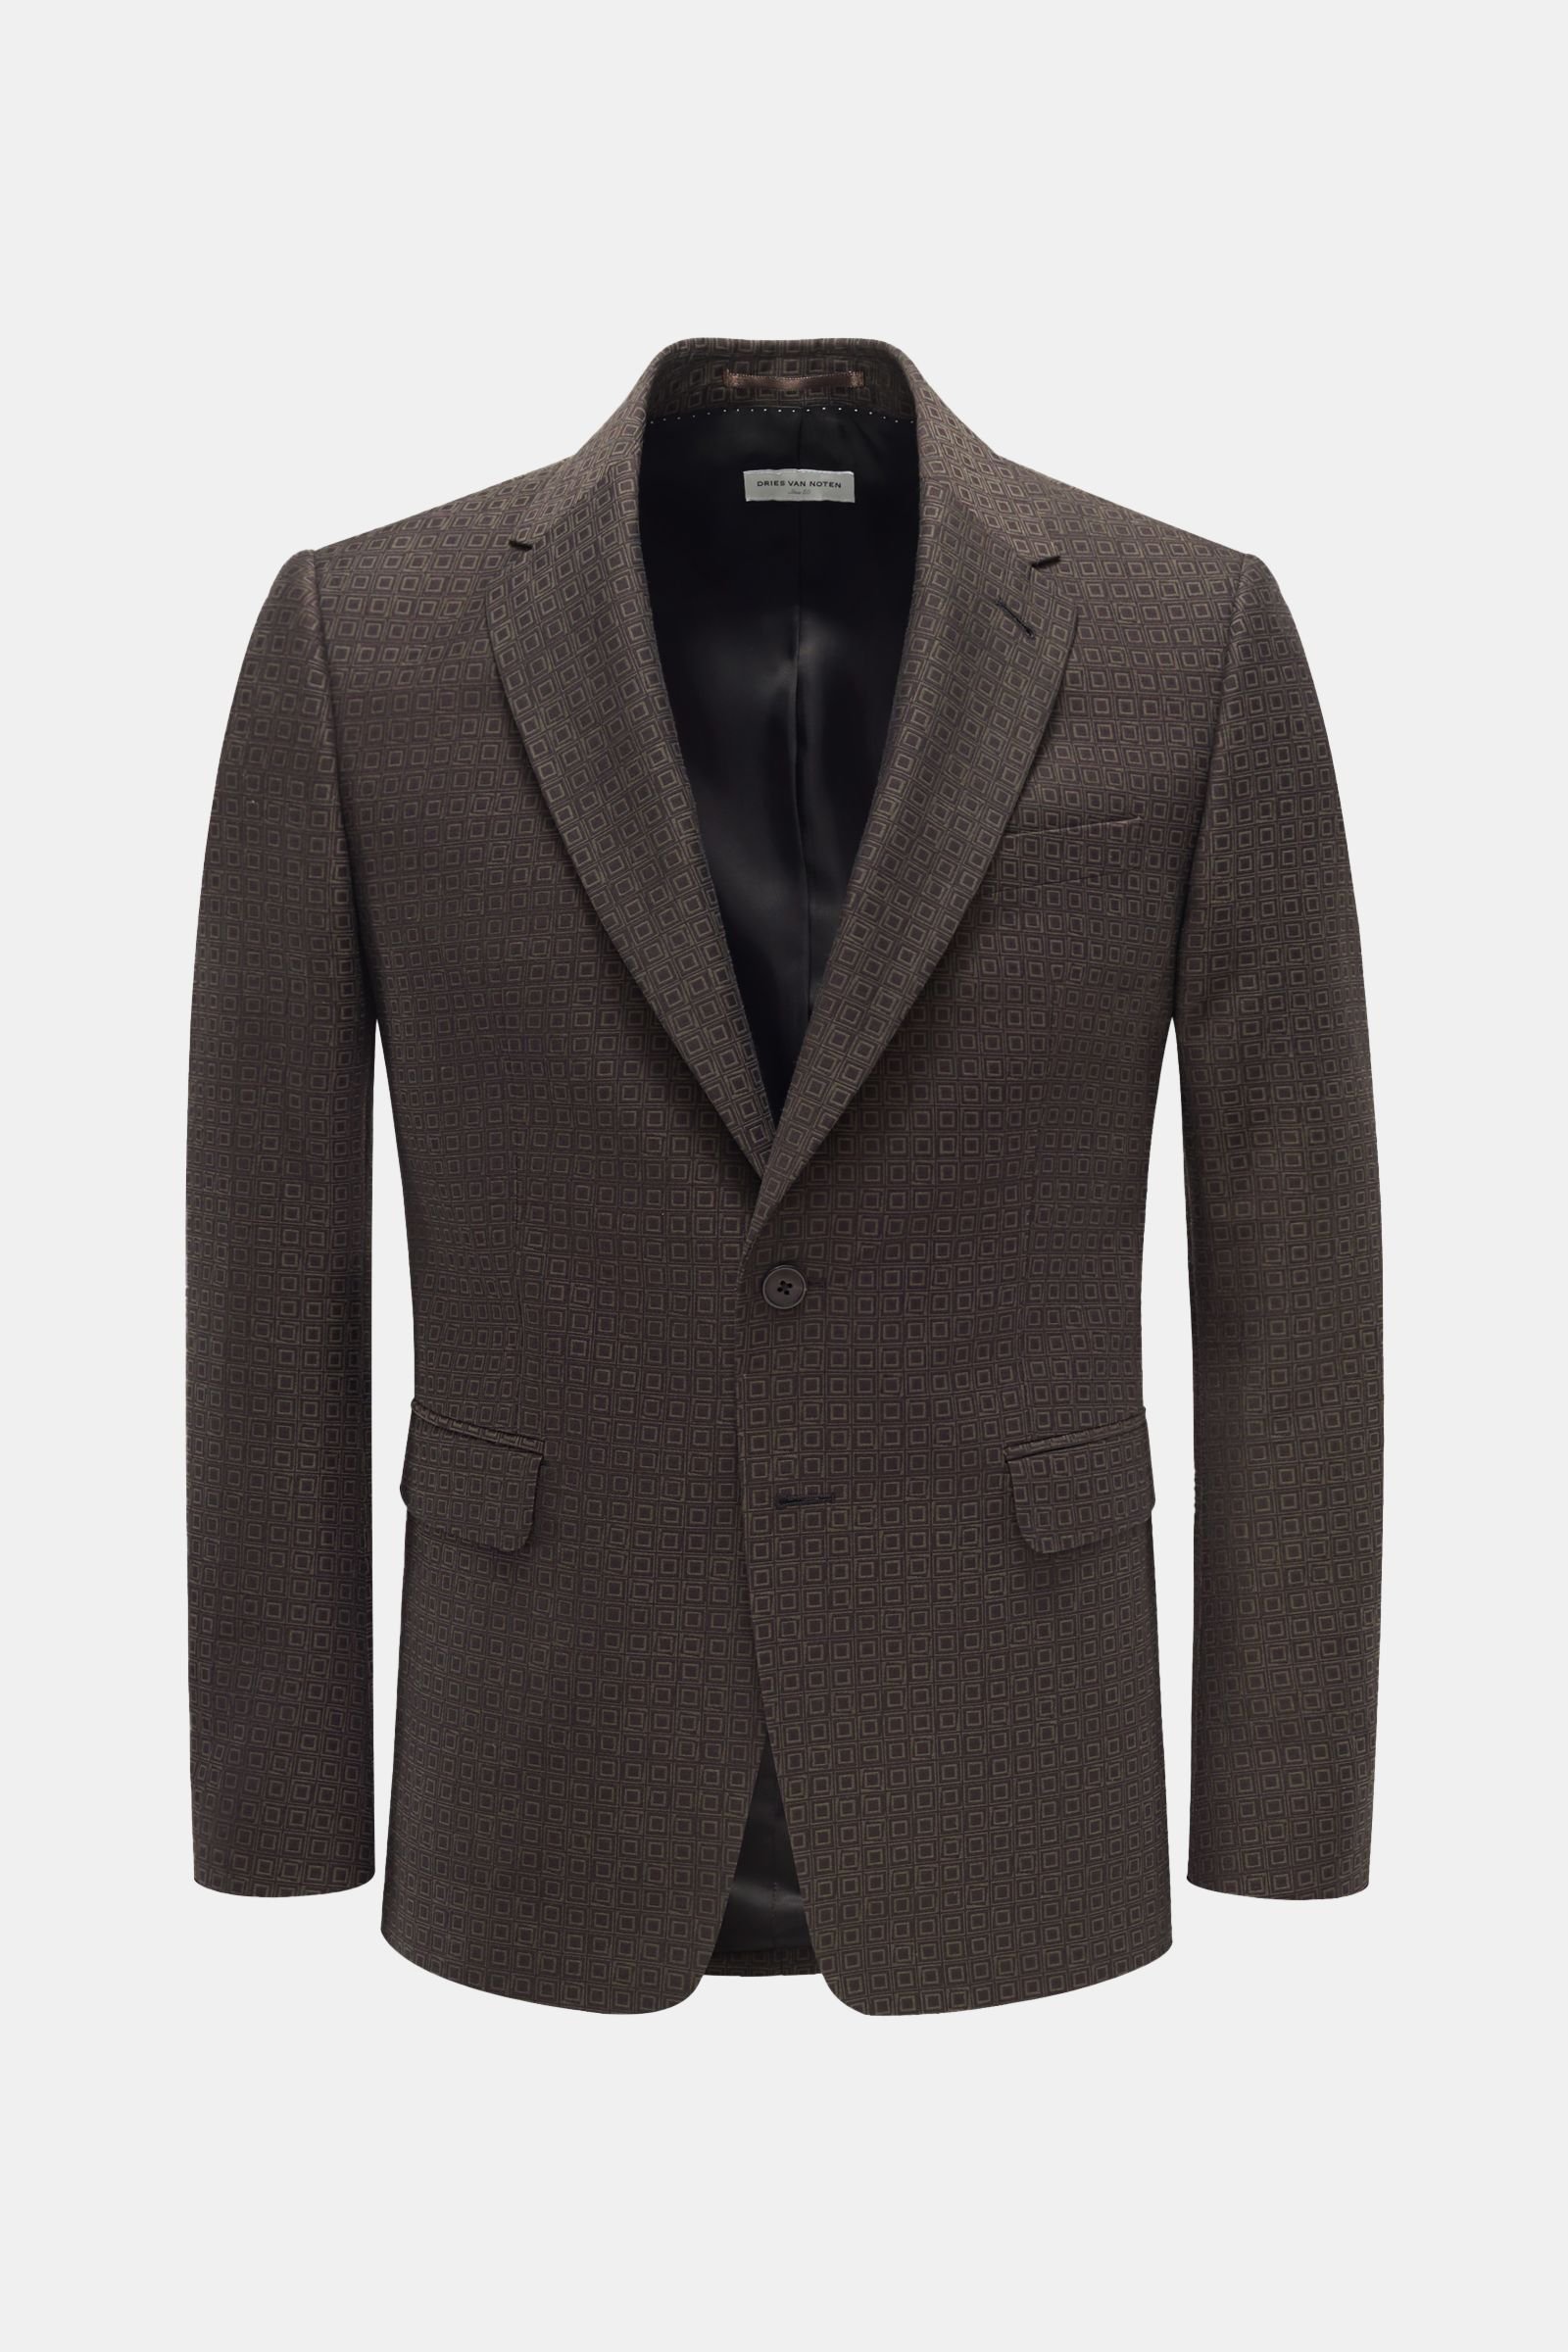 Smart-casual jacket 'Bakelit' brown patterned